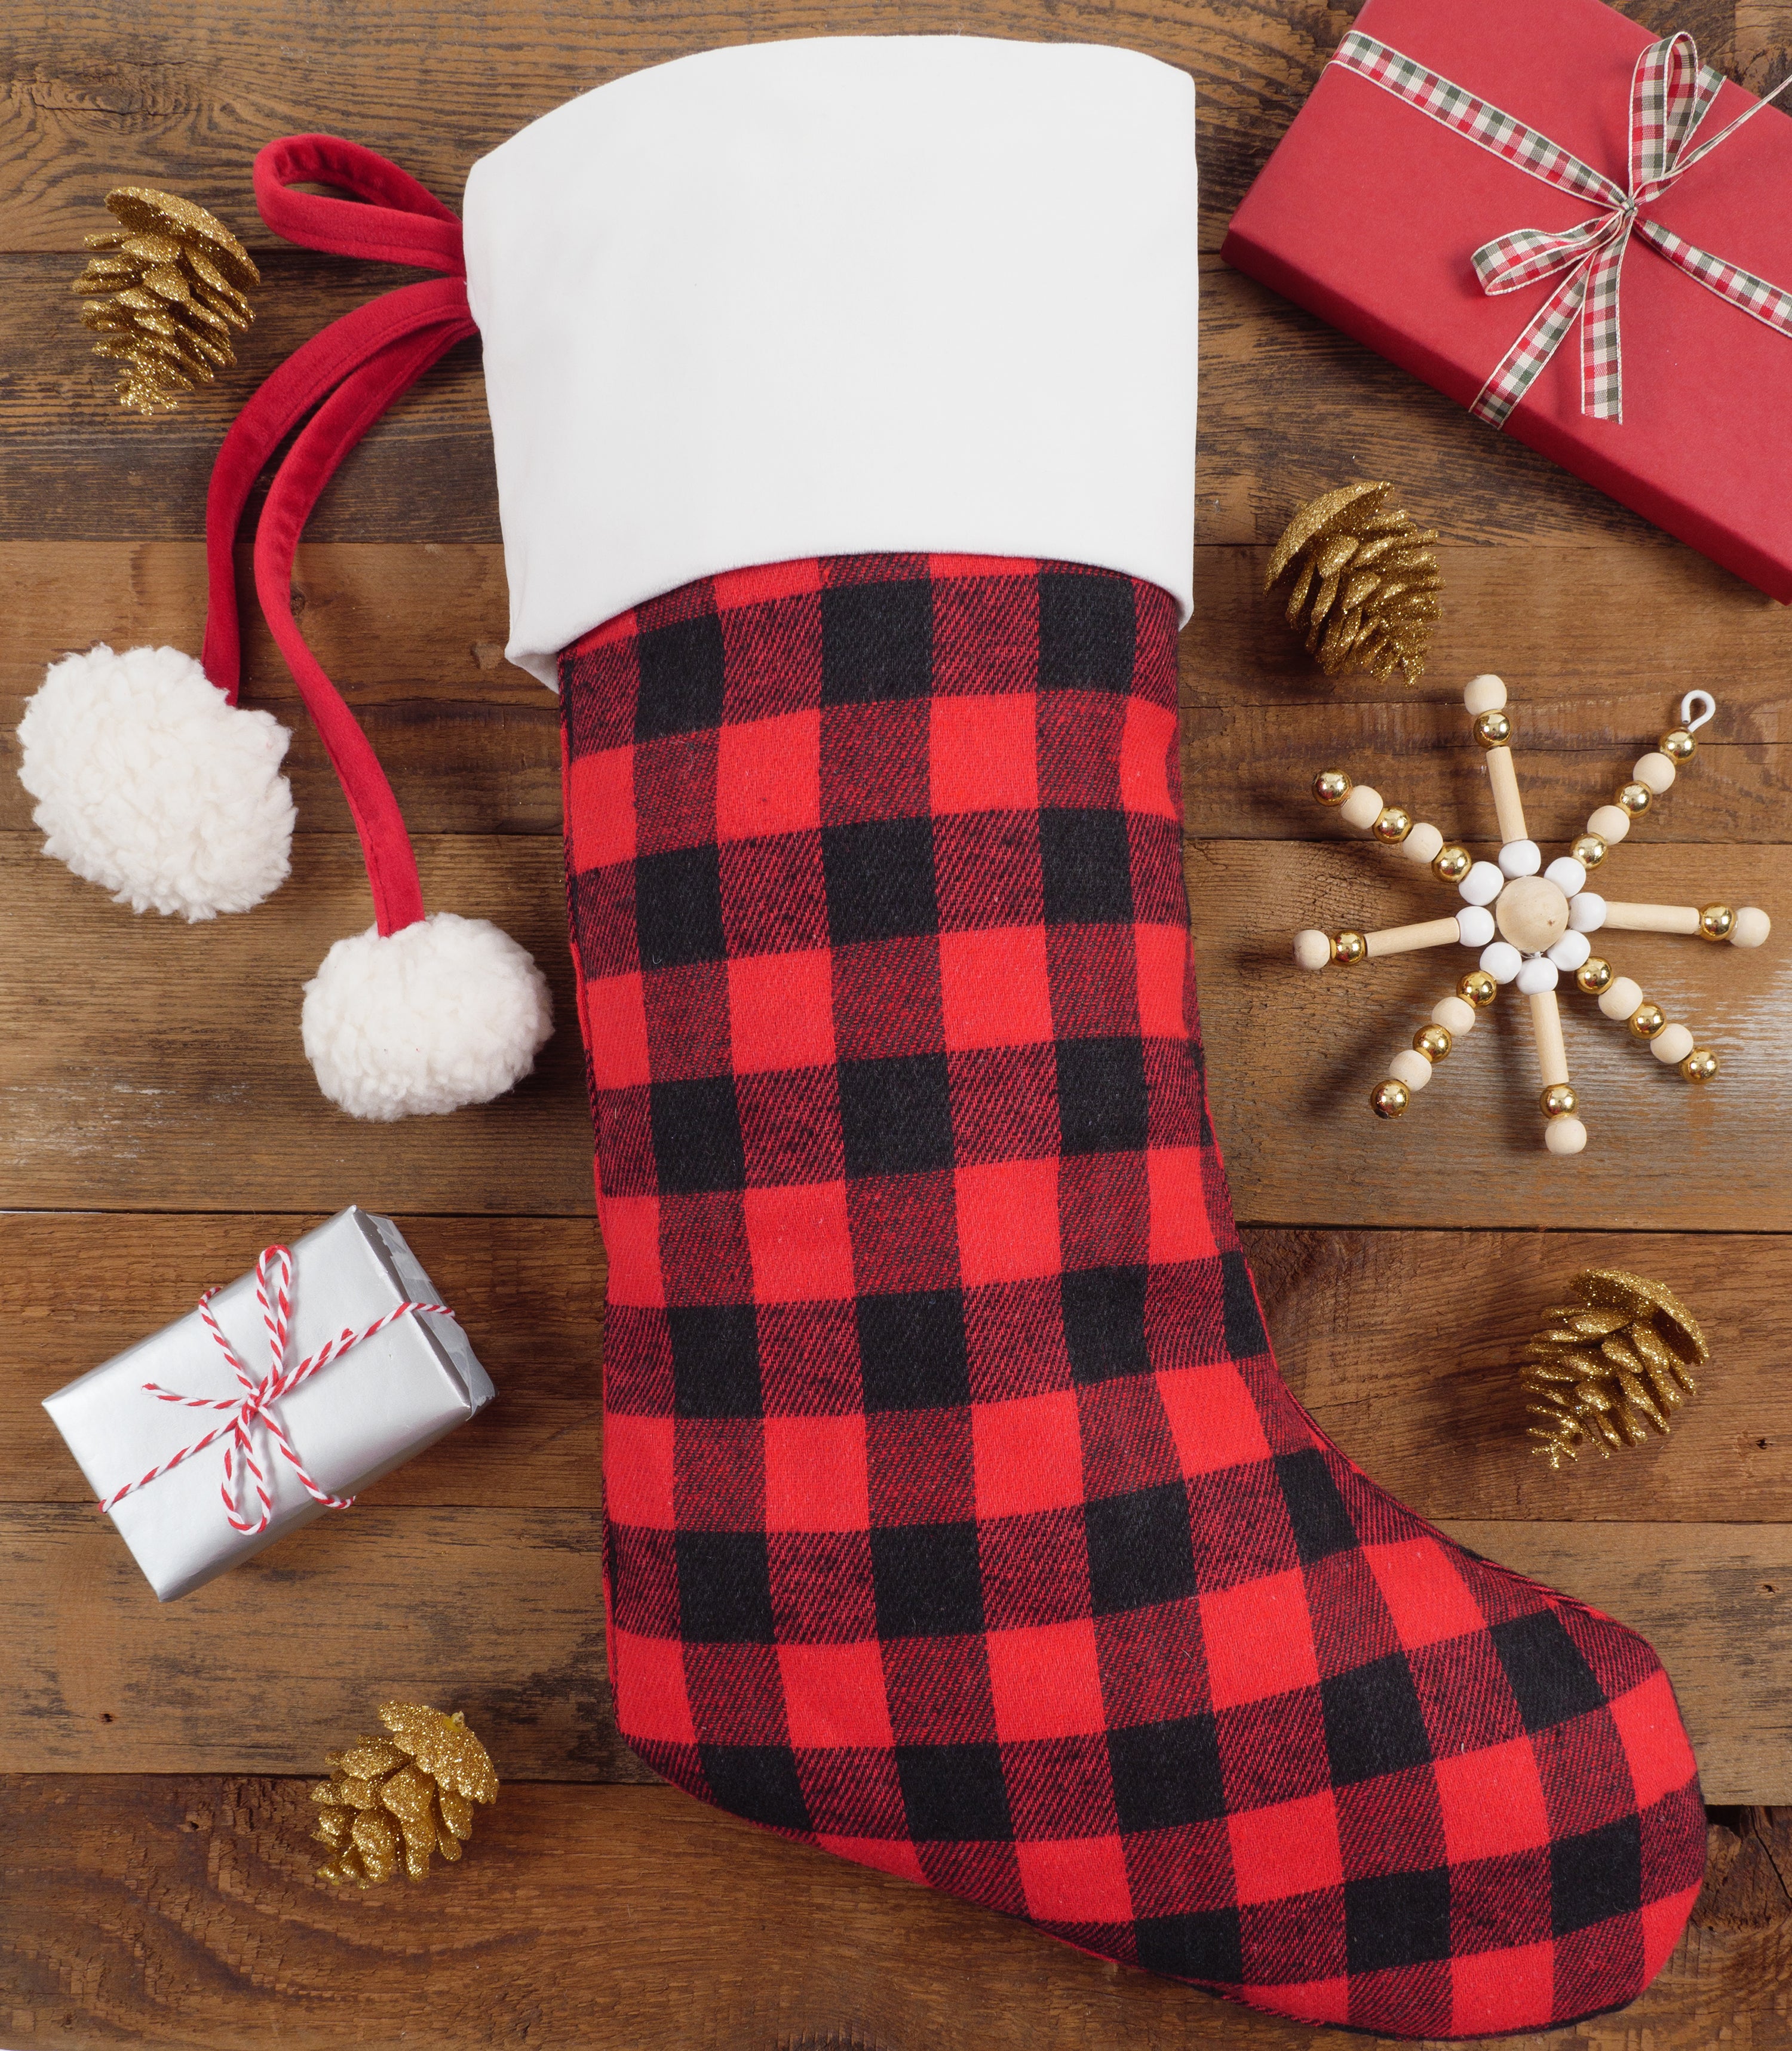 KAF Home Christmas/Holiday Stockings | Set of 2 Stockings with Pom Poms - 19" x 11"